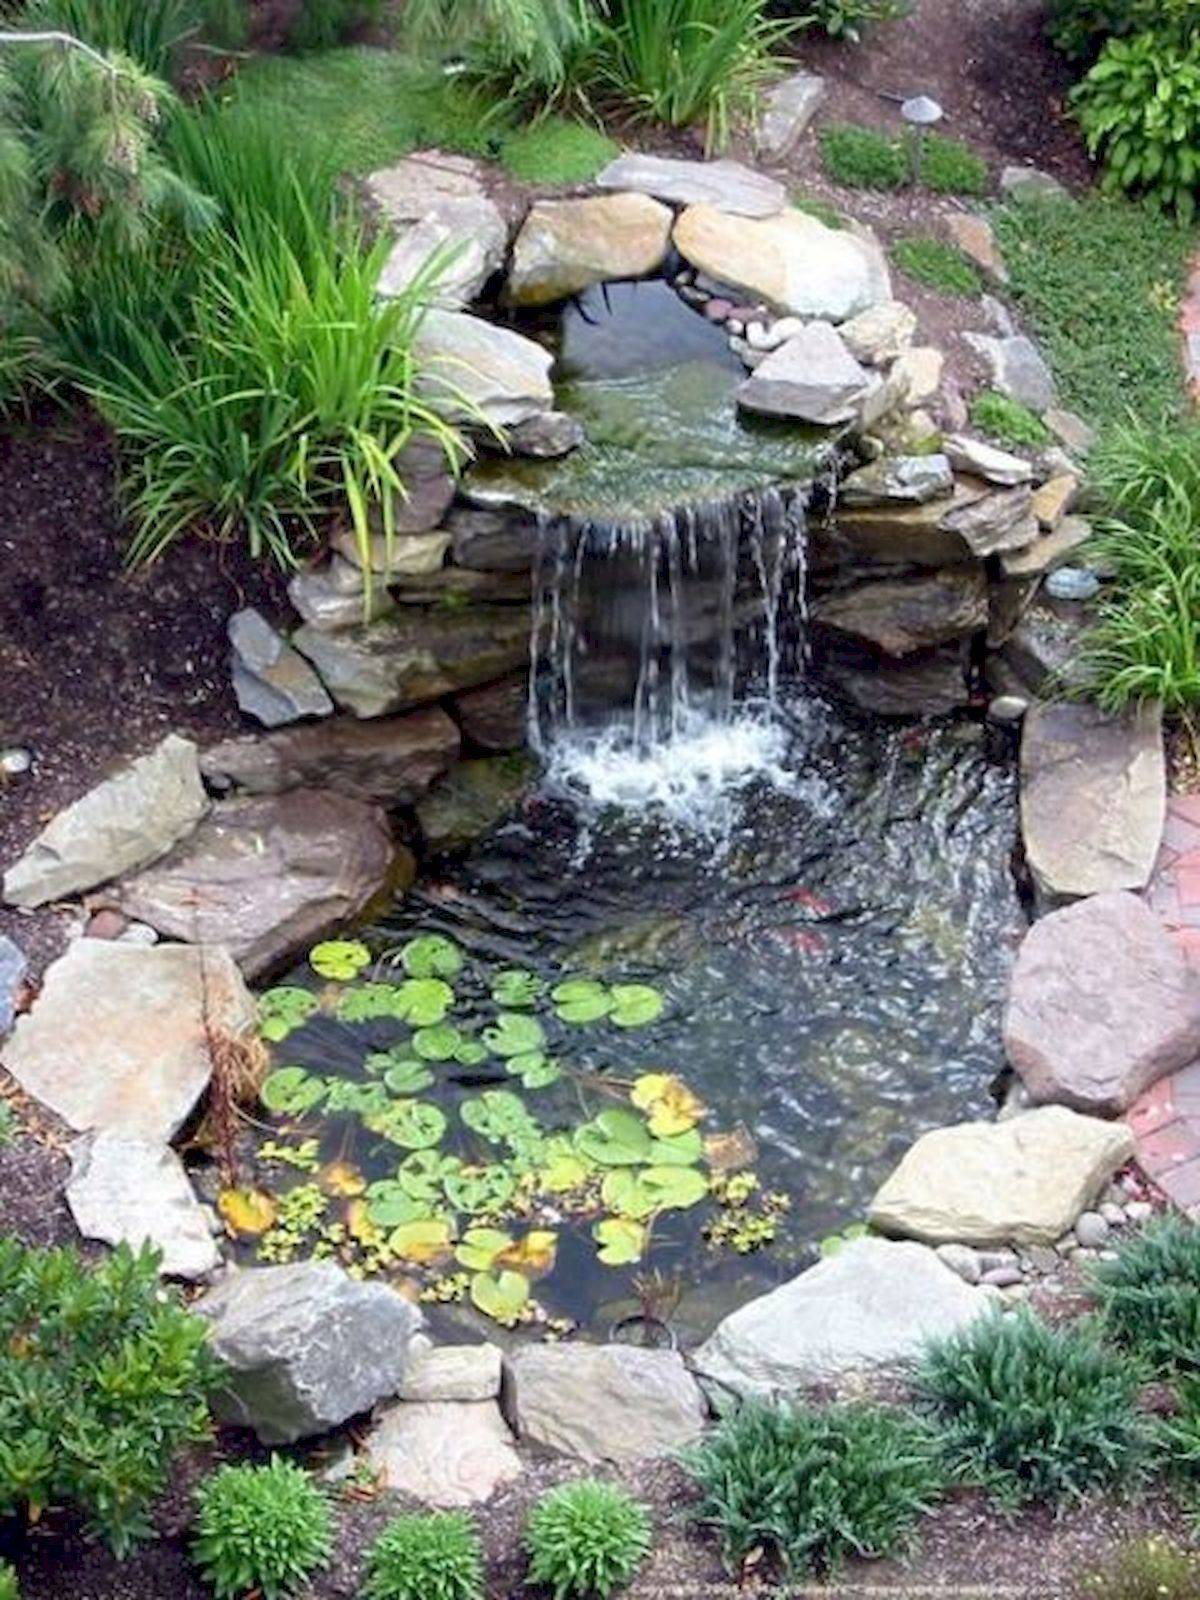 Cool Fish Pond Garden Landscaping Ideas